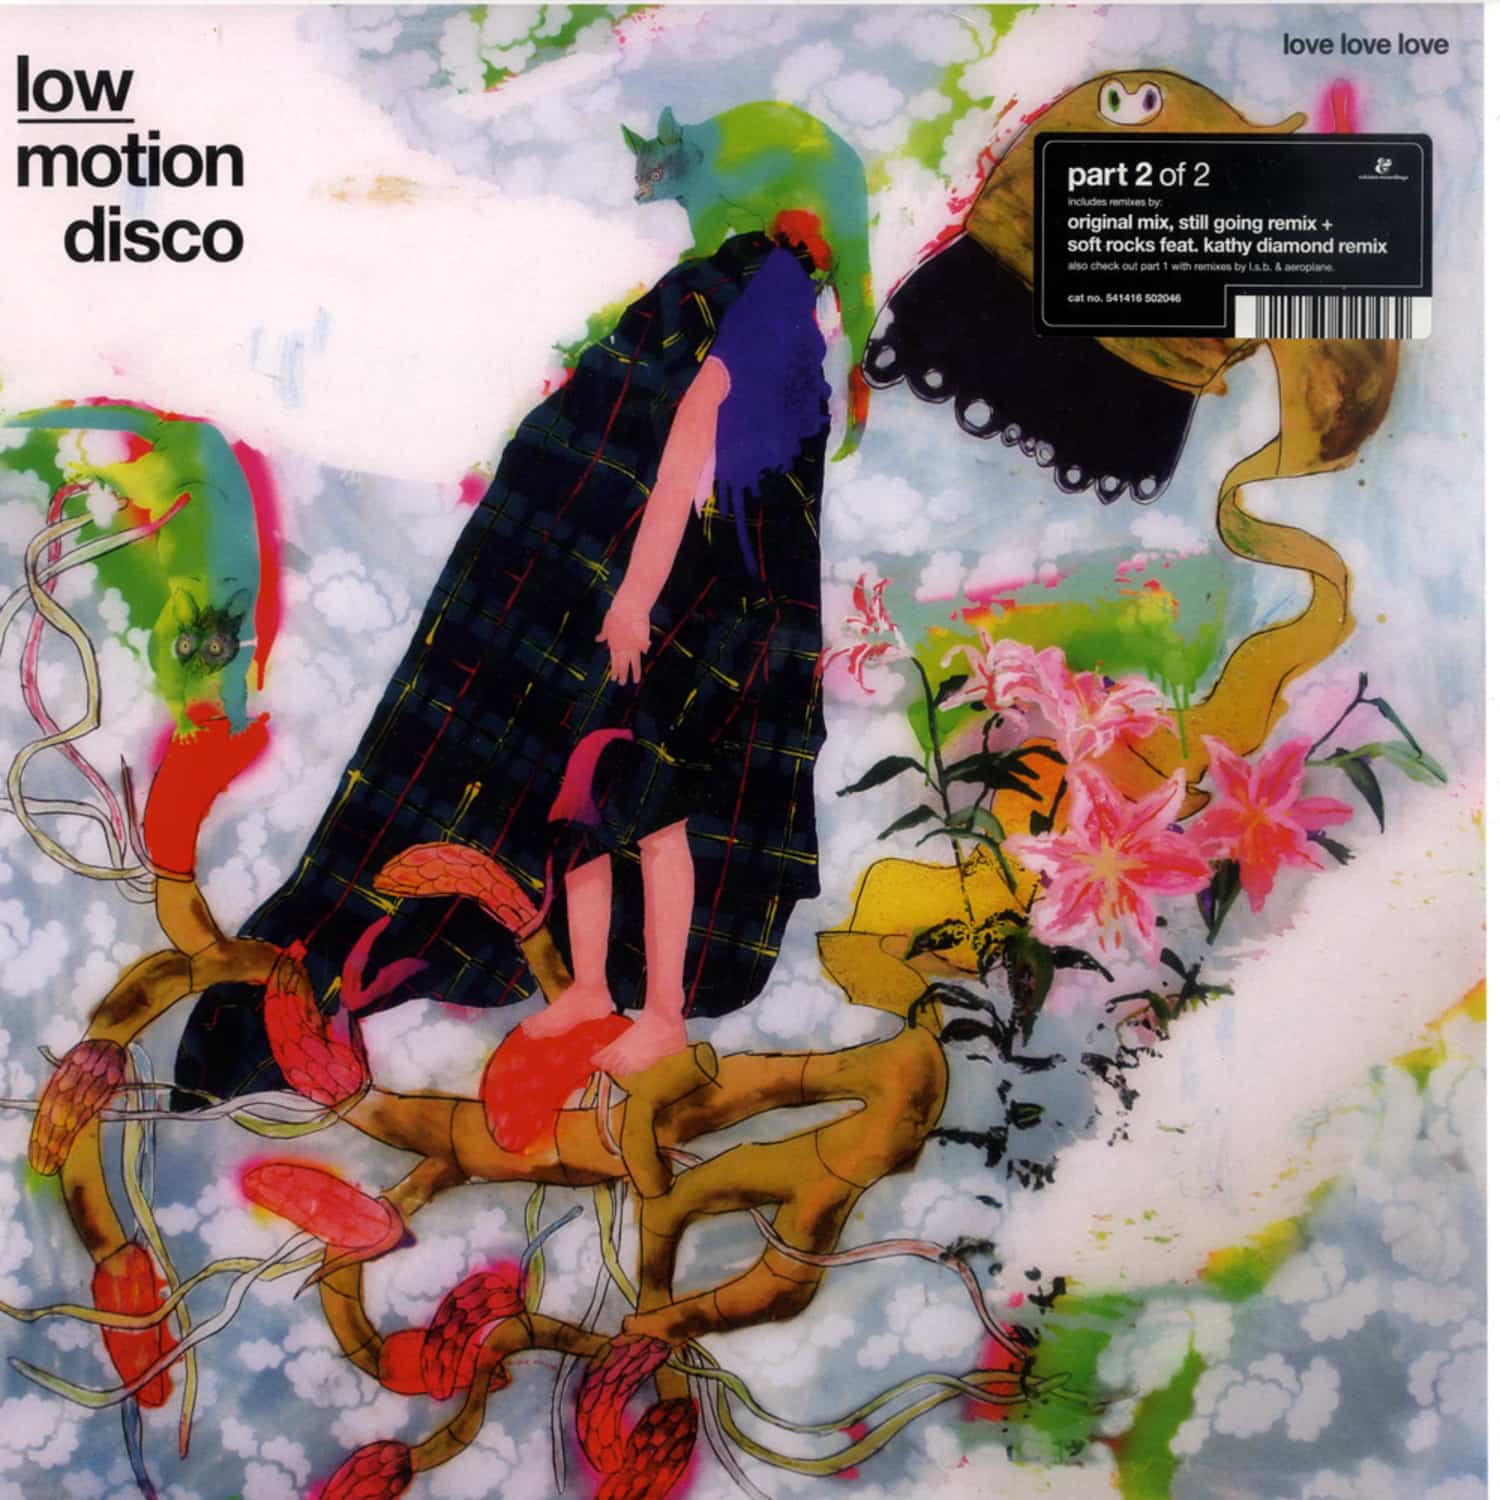 Low Motion Disco - LOVE LOVE LOVE PT2